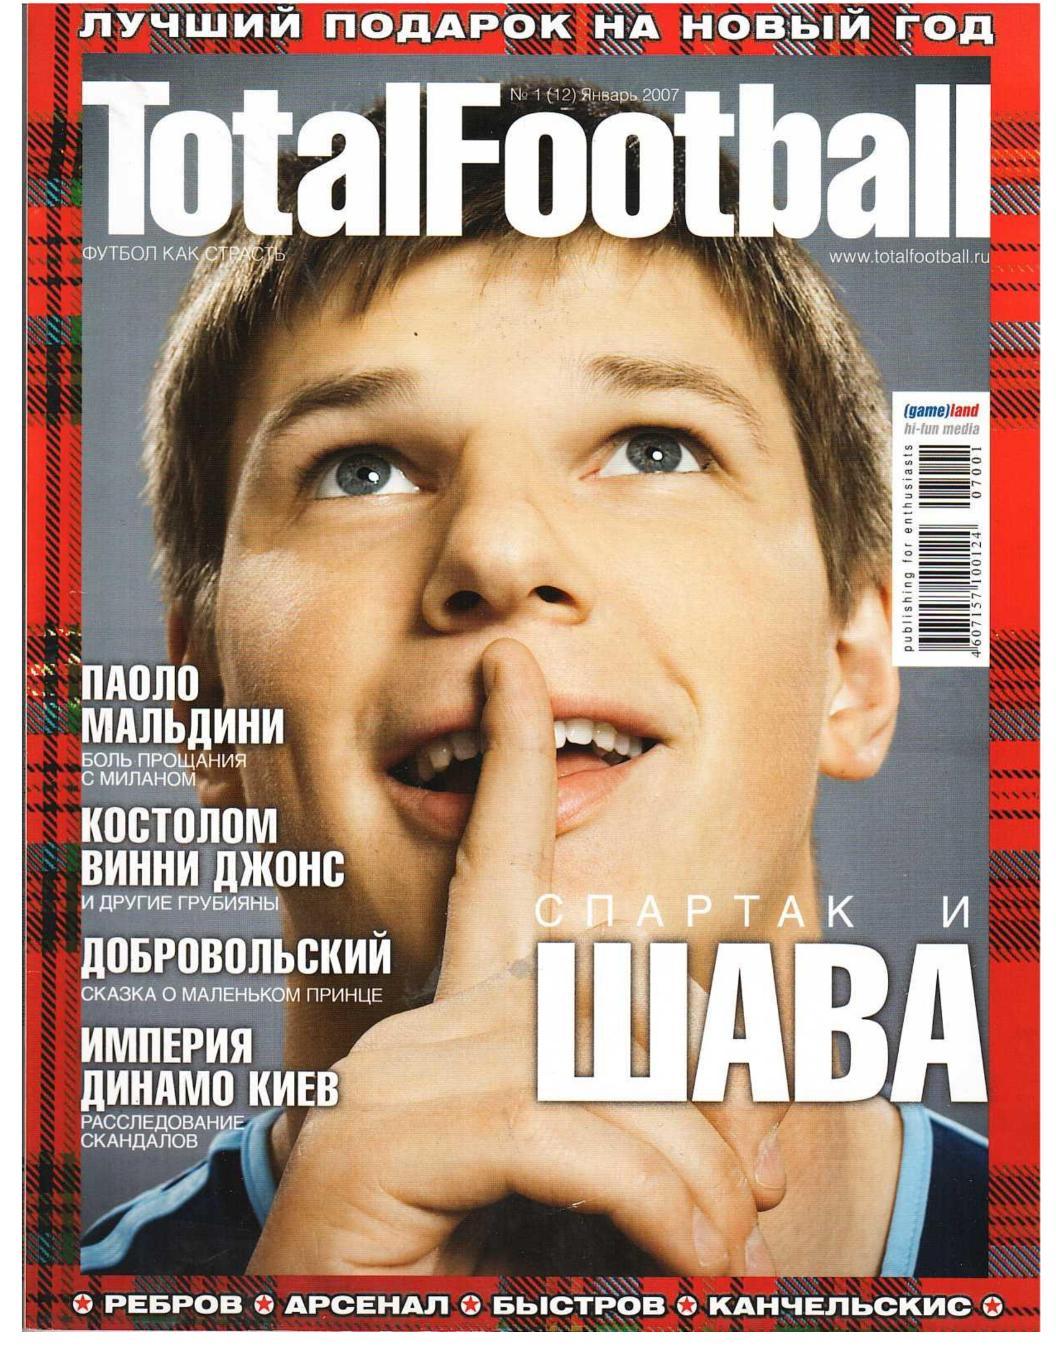 TotalFootball 2007, № 1, январь.